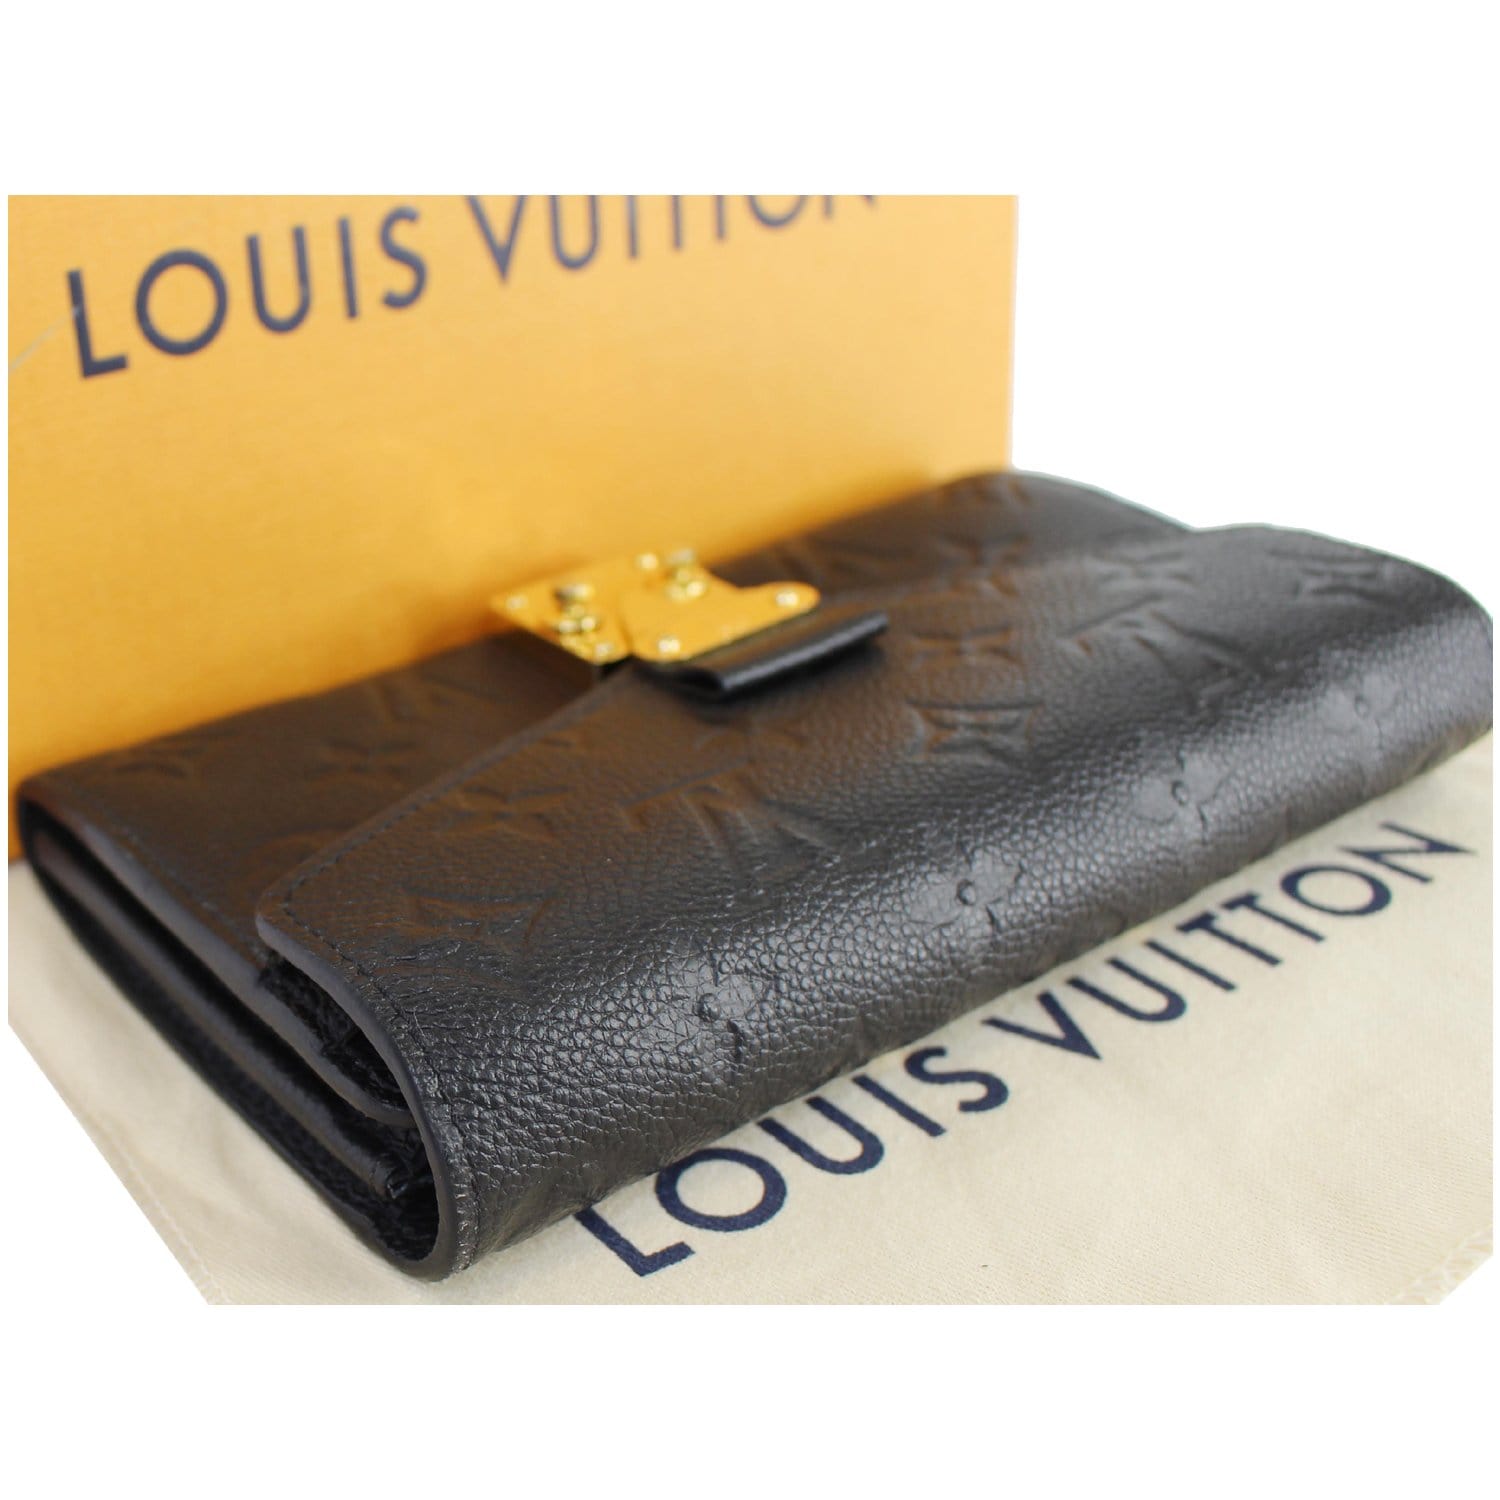 LOUIS VUITTON Empreinte Metis Compact Wallet Black 1286691